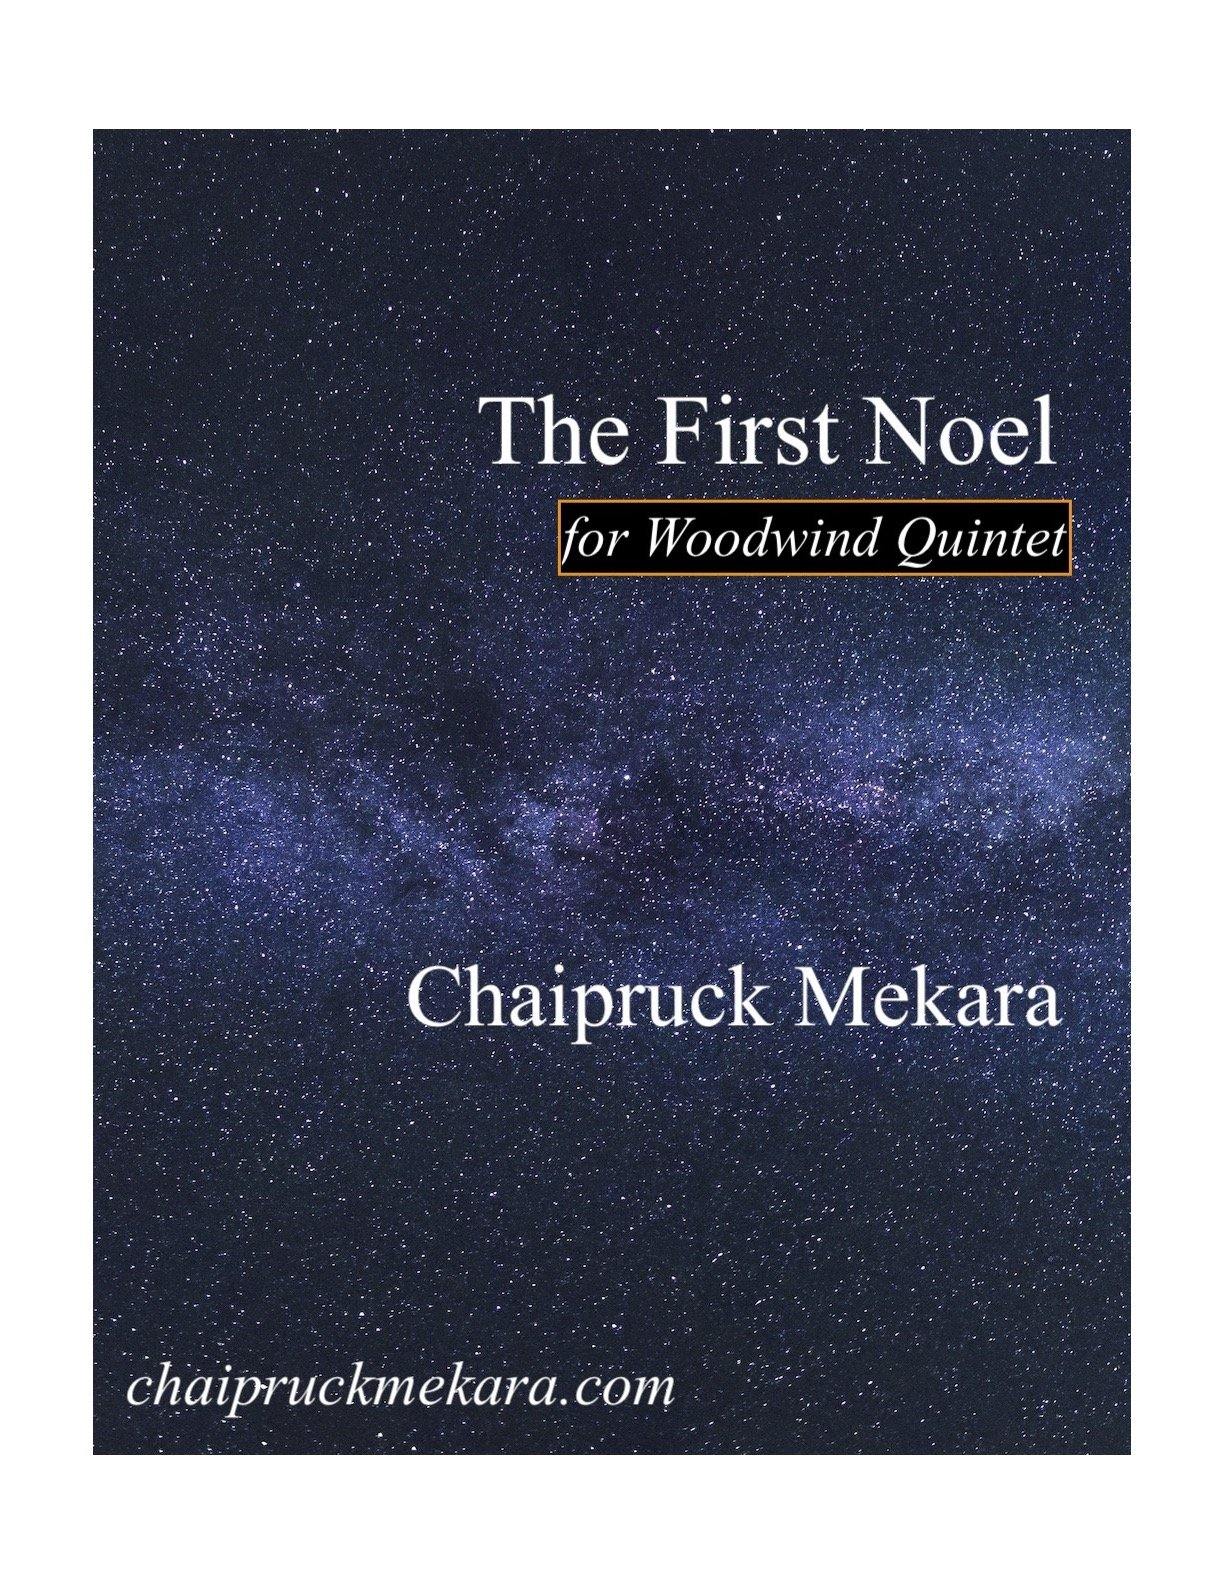 The First Noel for Woodwind Quintet - ChaipruckMekara